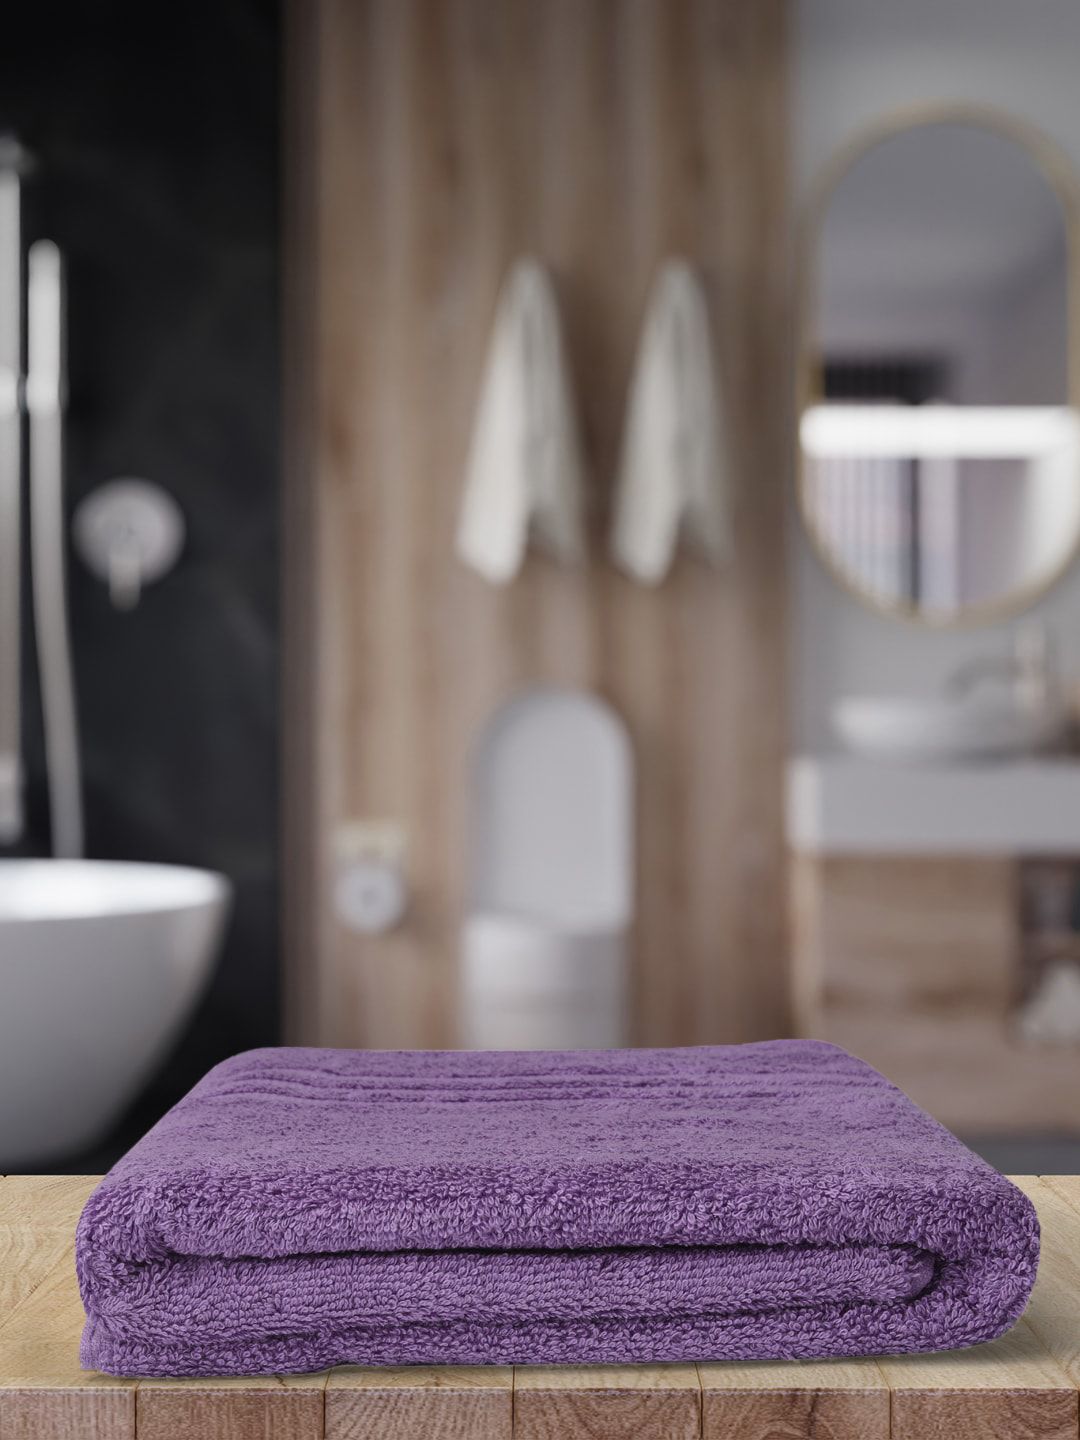 Monte Carlo Voilet Cotton 650 GSM Bath Towel Price in India